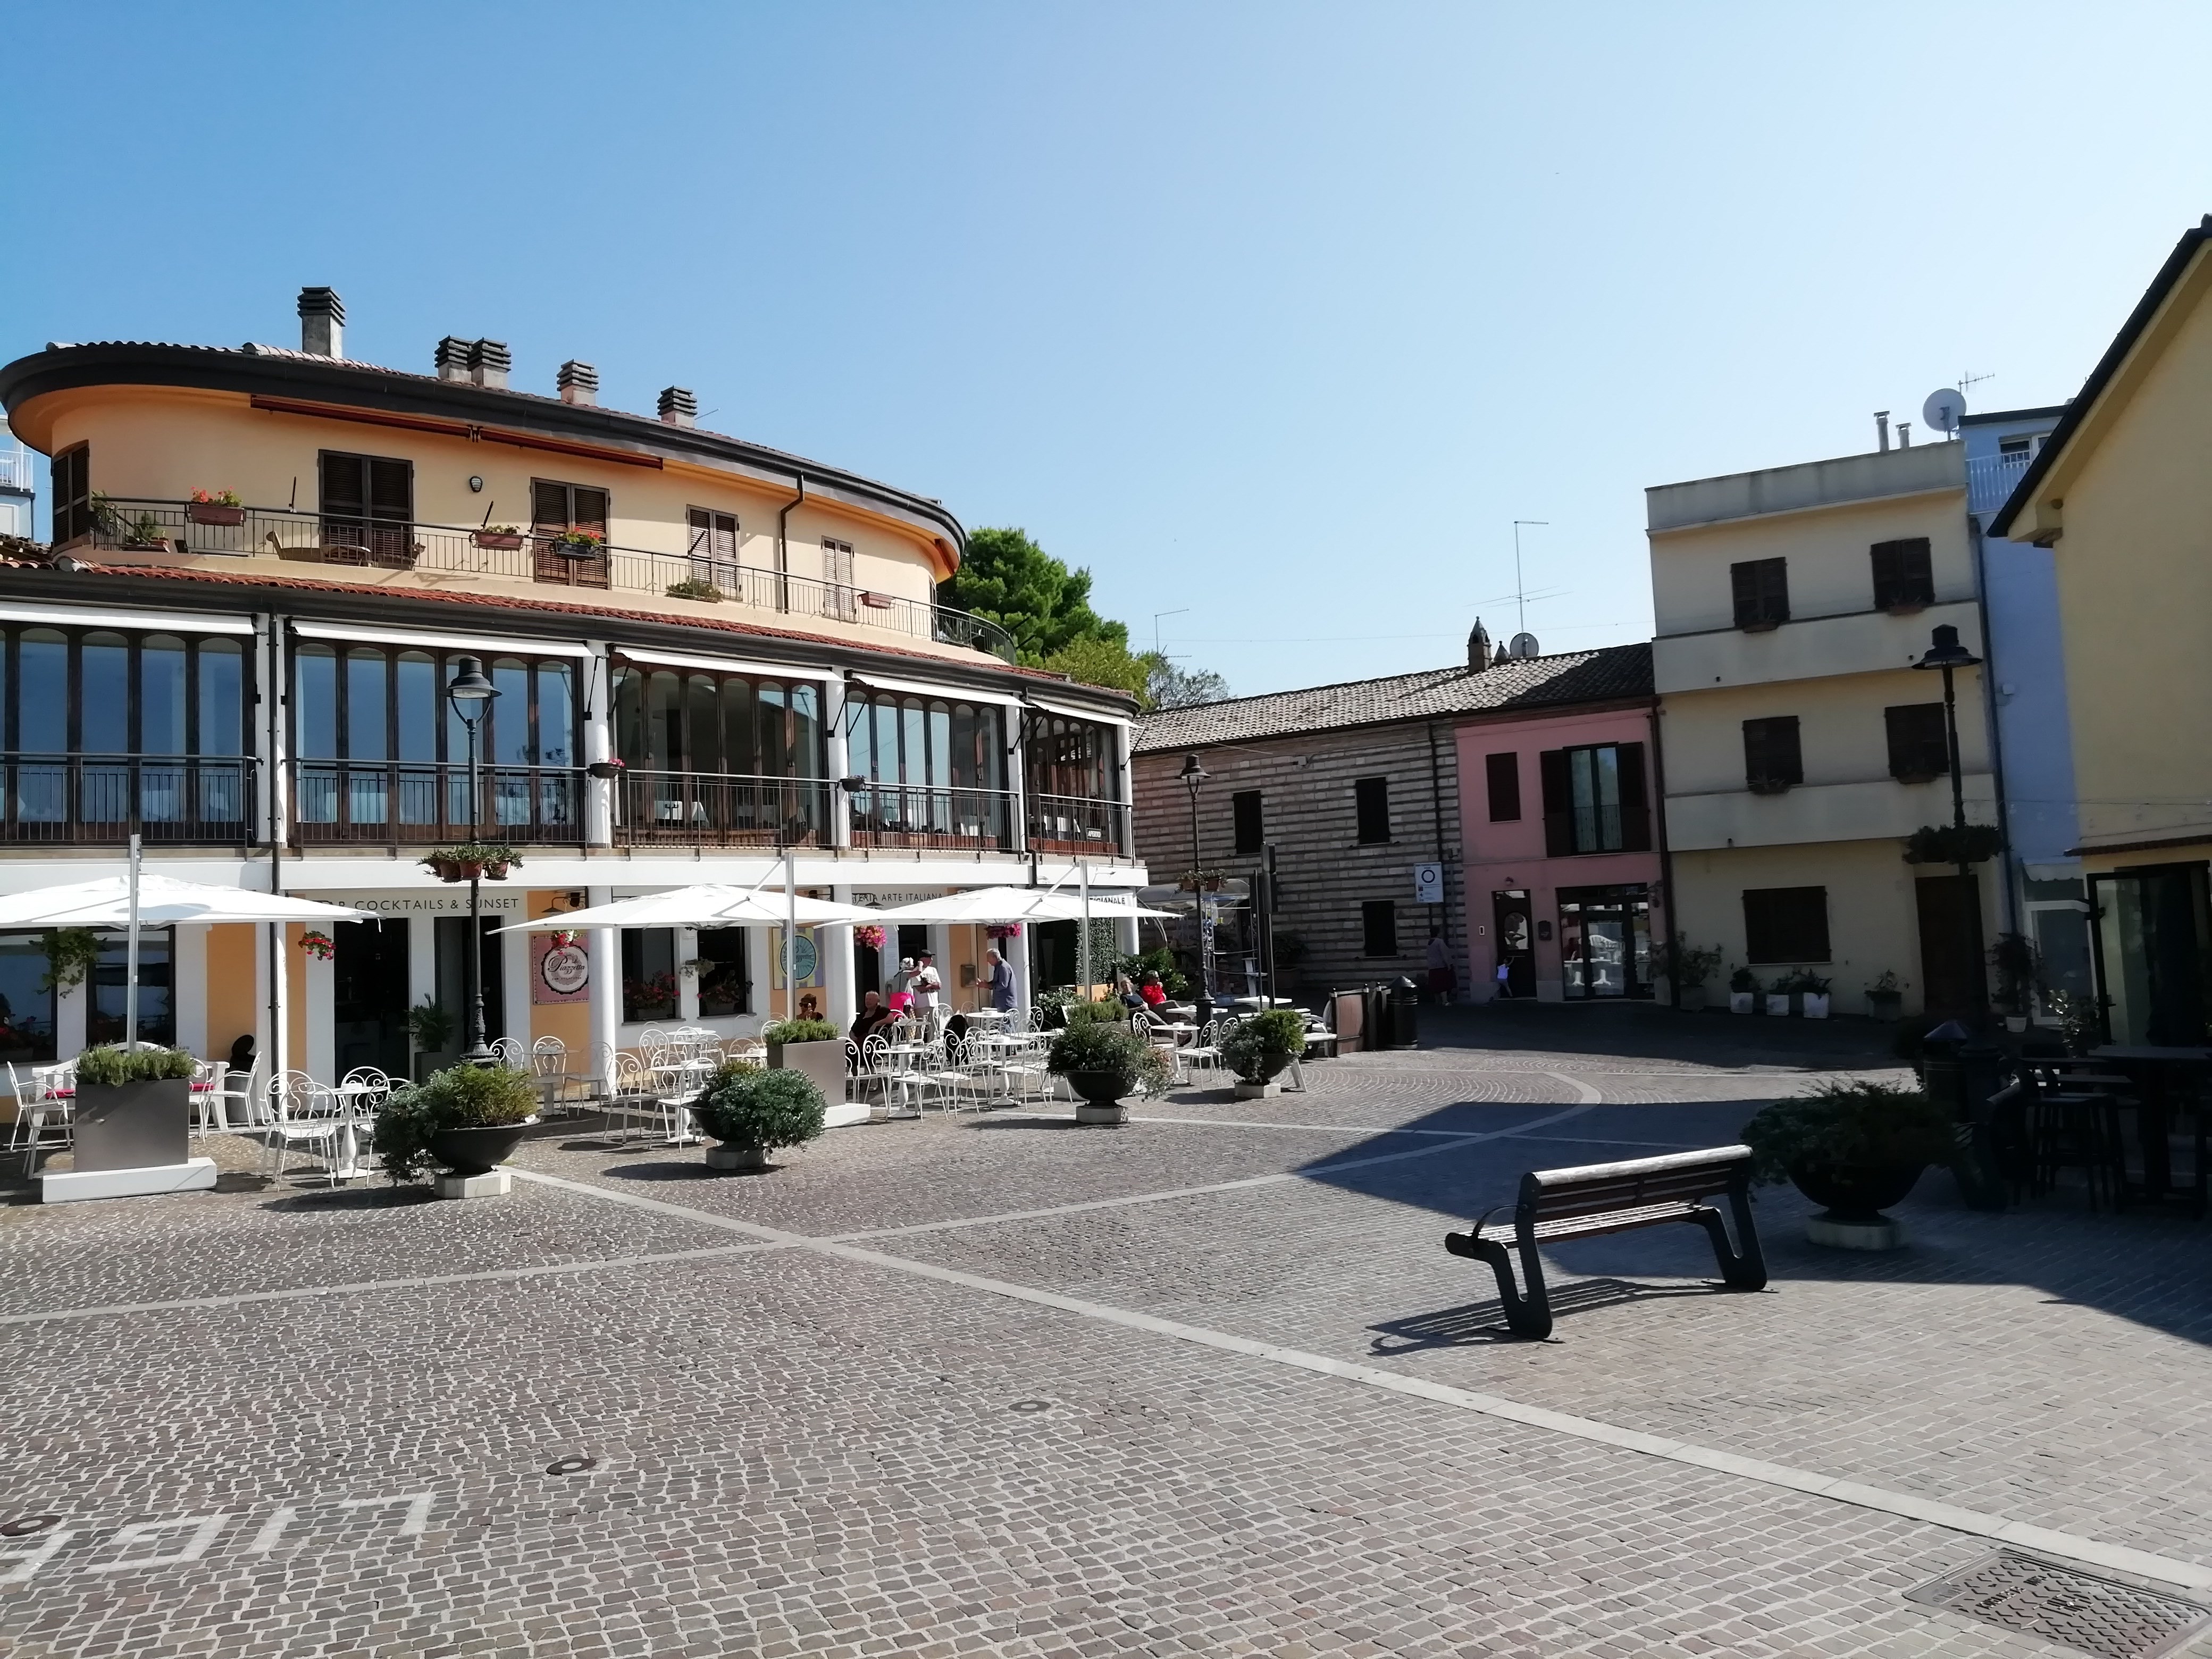 Gabicce Monte - Piazza Valbruna